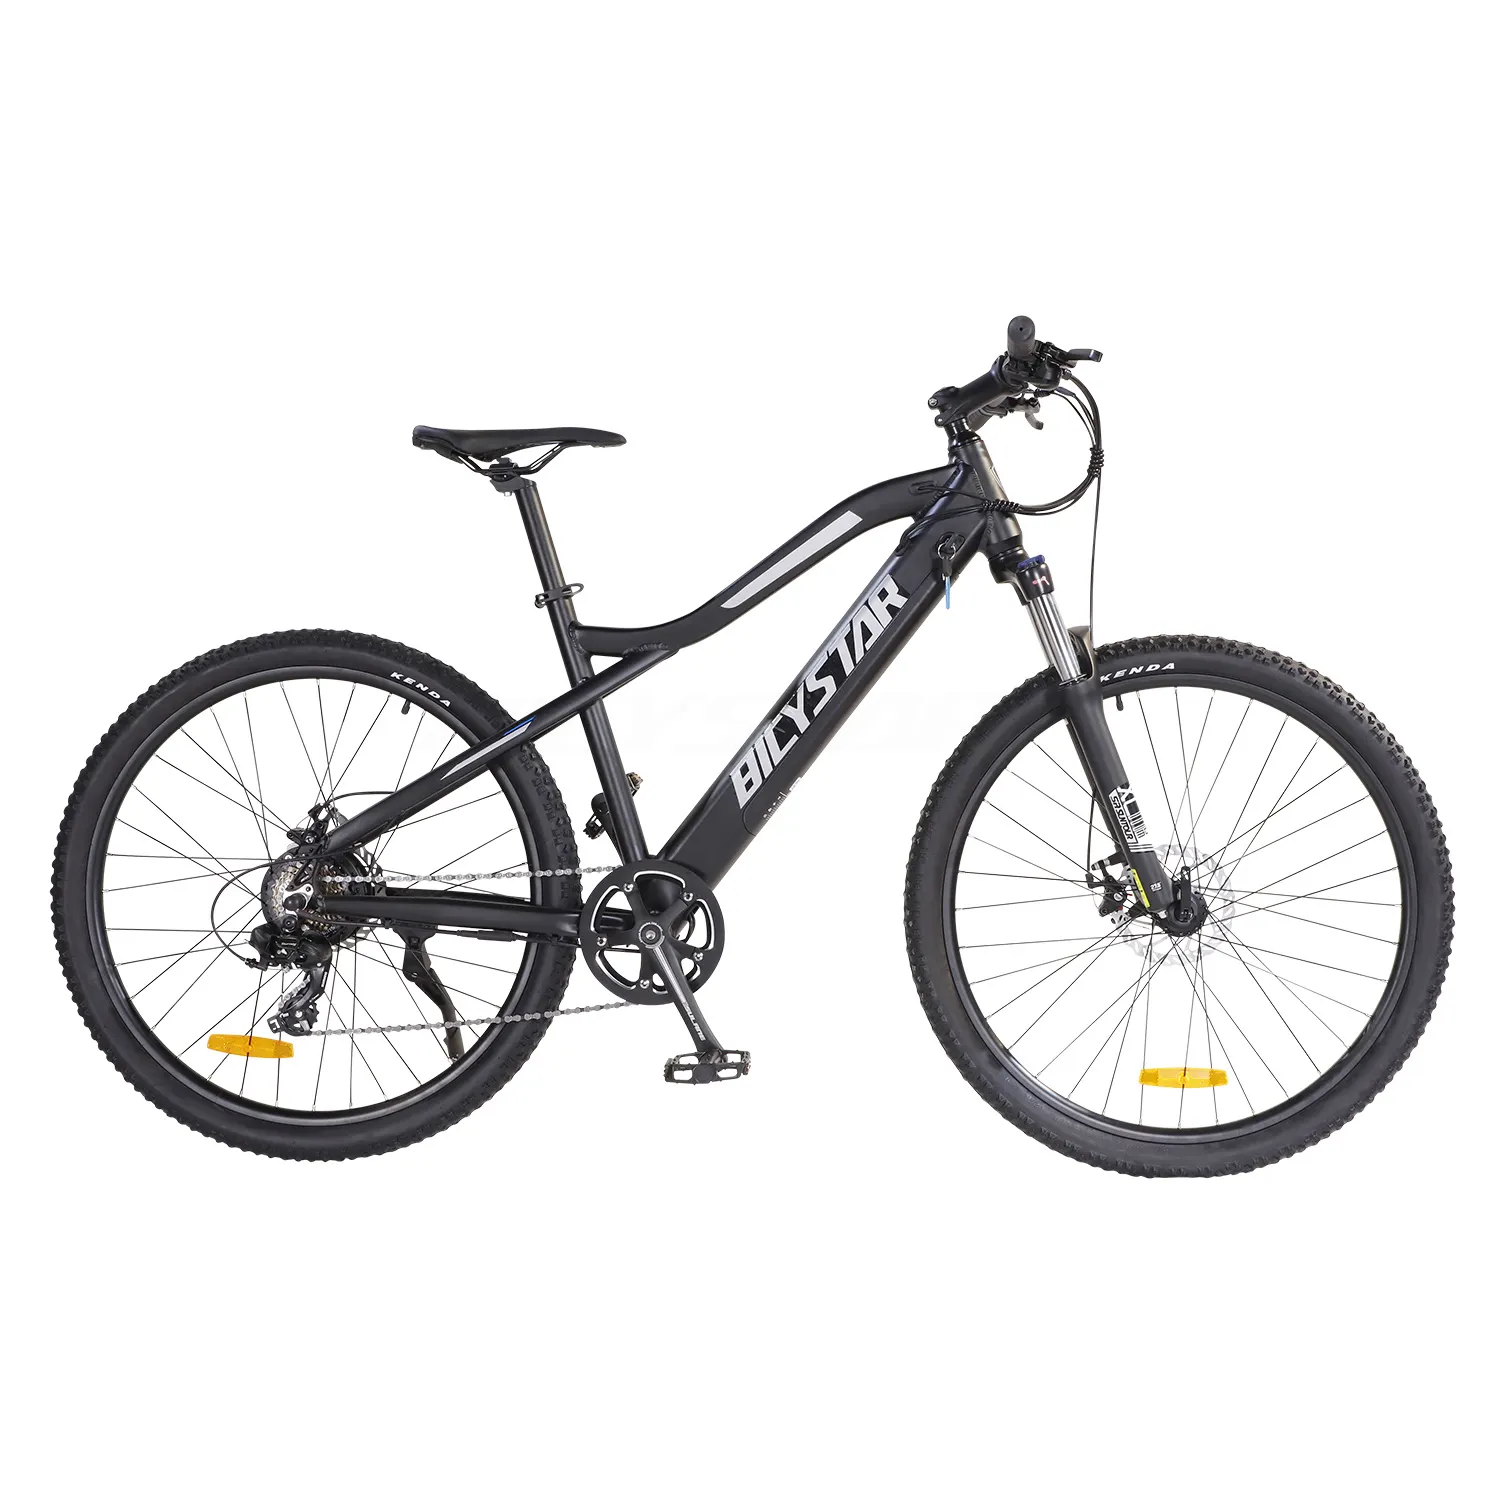 1000w bici כביש אופניים חשמליים דואר אופניים/מכירה לוהטת הרי אופניים חשמליים 48v סוללה e-אופניים עבור מכירה/לקנות ebike מסין